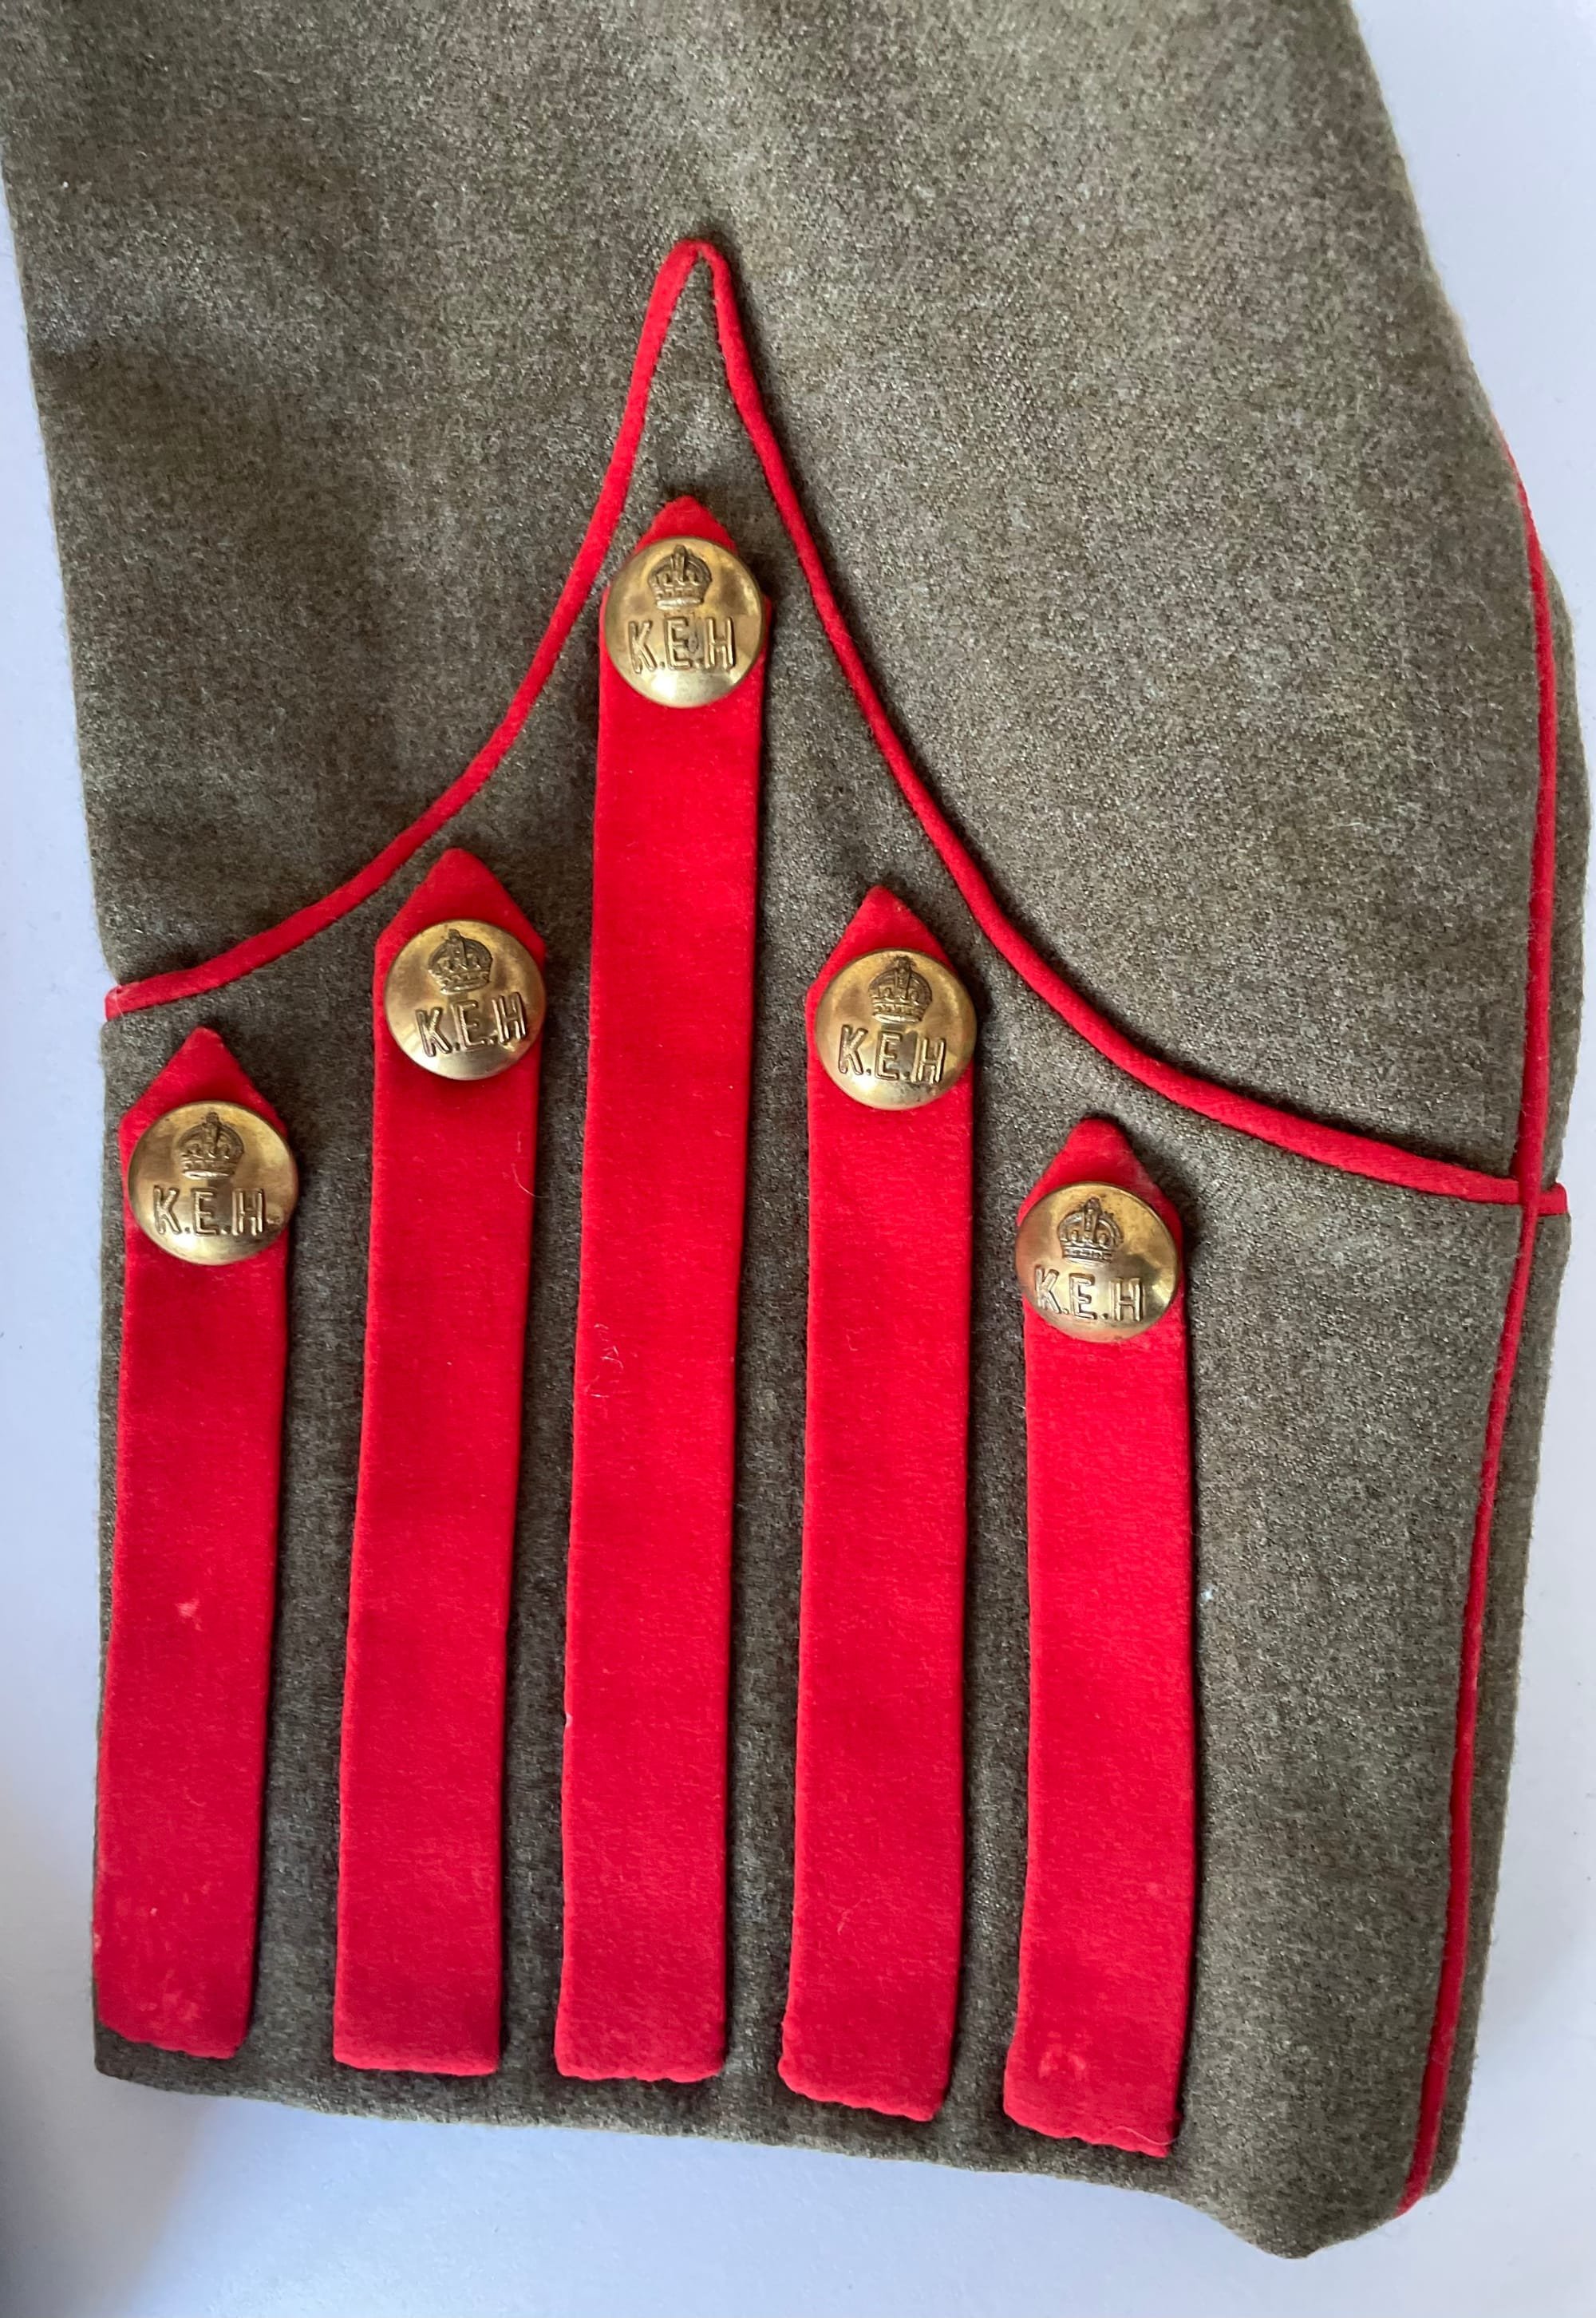 KEH Officer's Full Dress tunic cuff detail